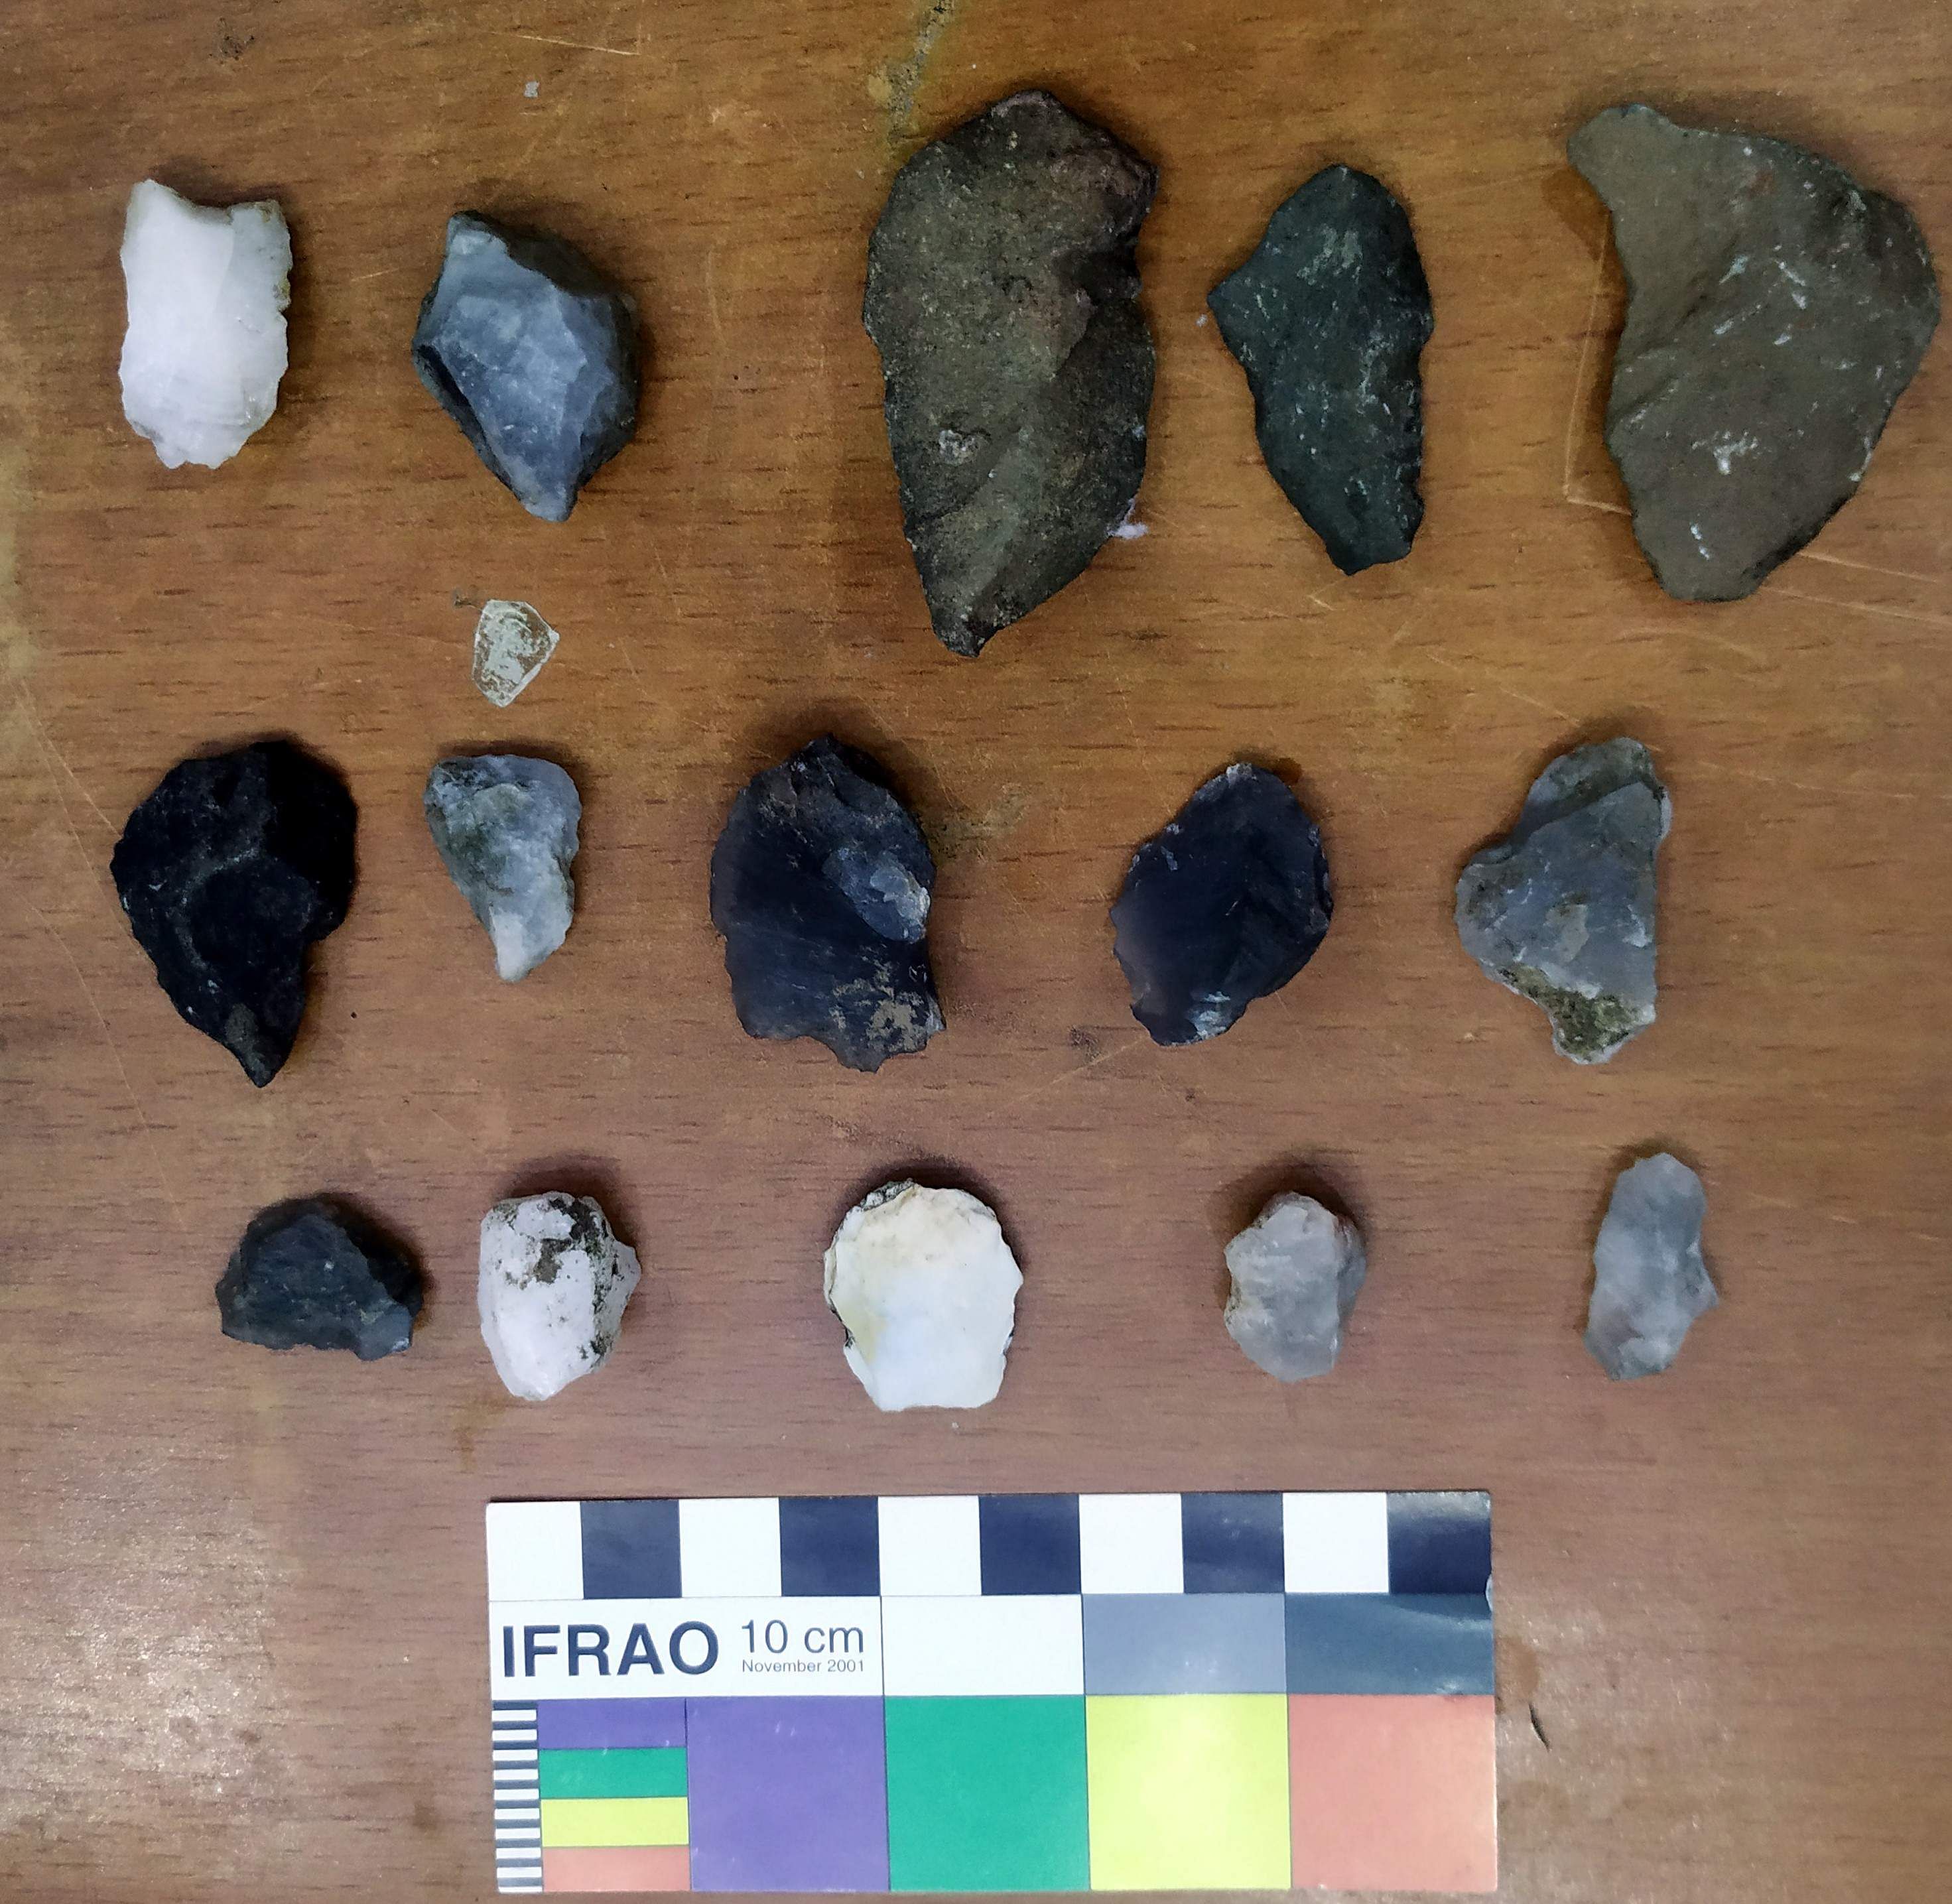 Mesolithic tools discovered at Iduru-Kunjadi in Kundapura taluk.